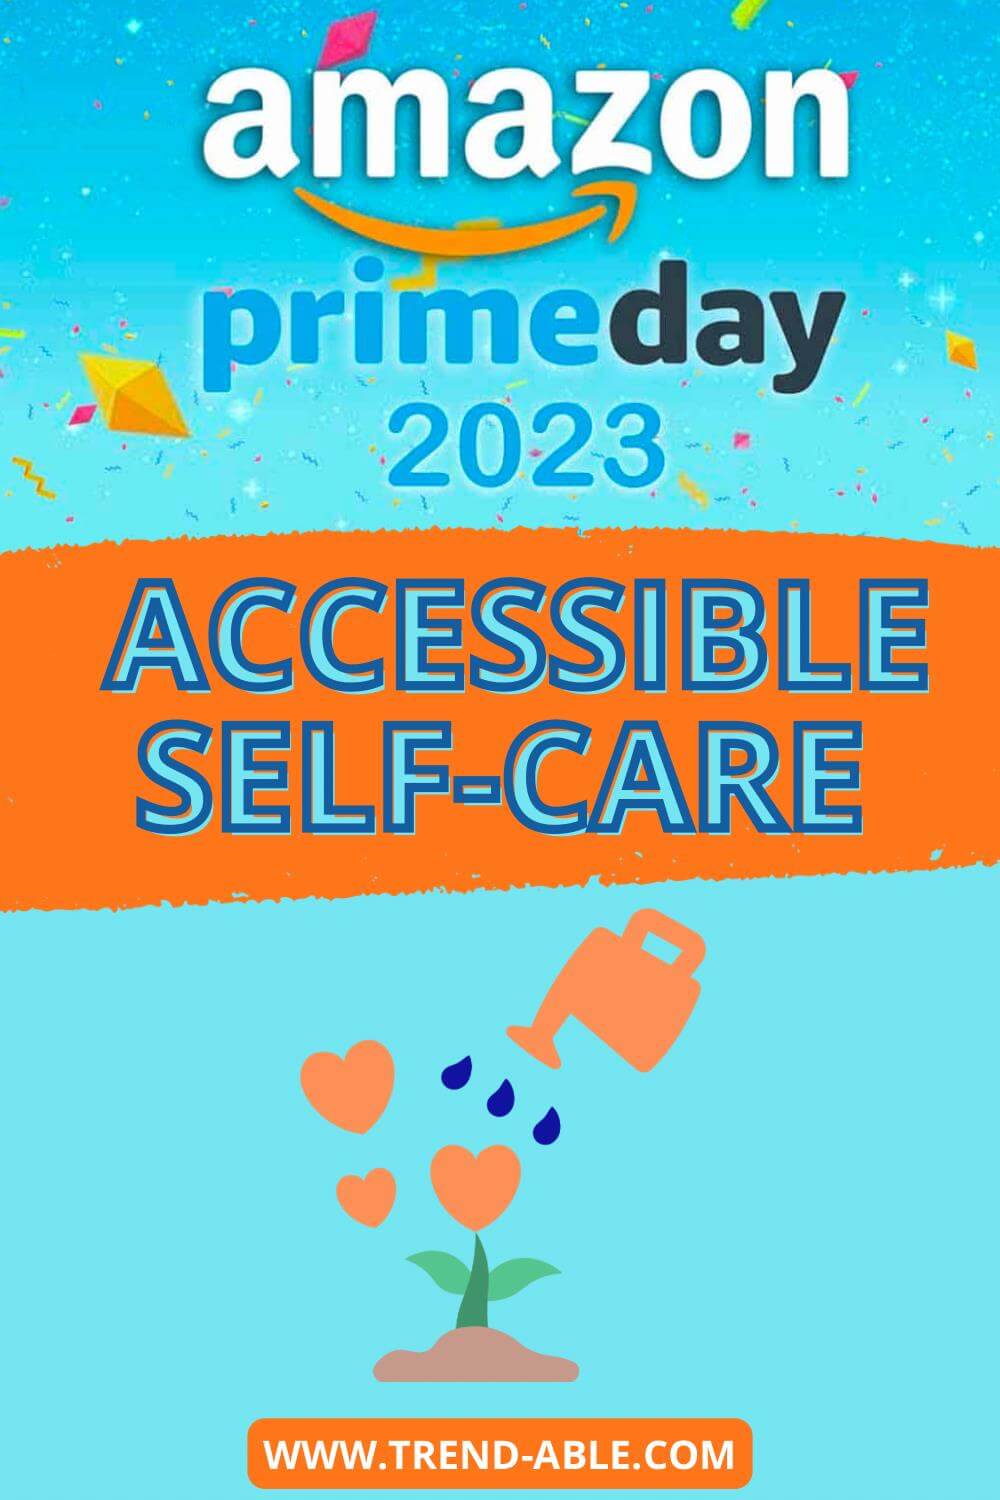 Amazon Prime Day 2023 Accessible self-care